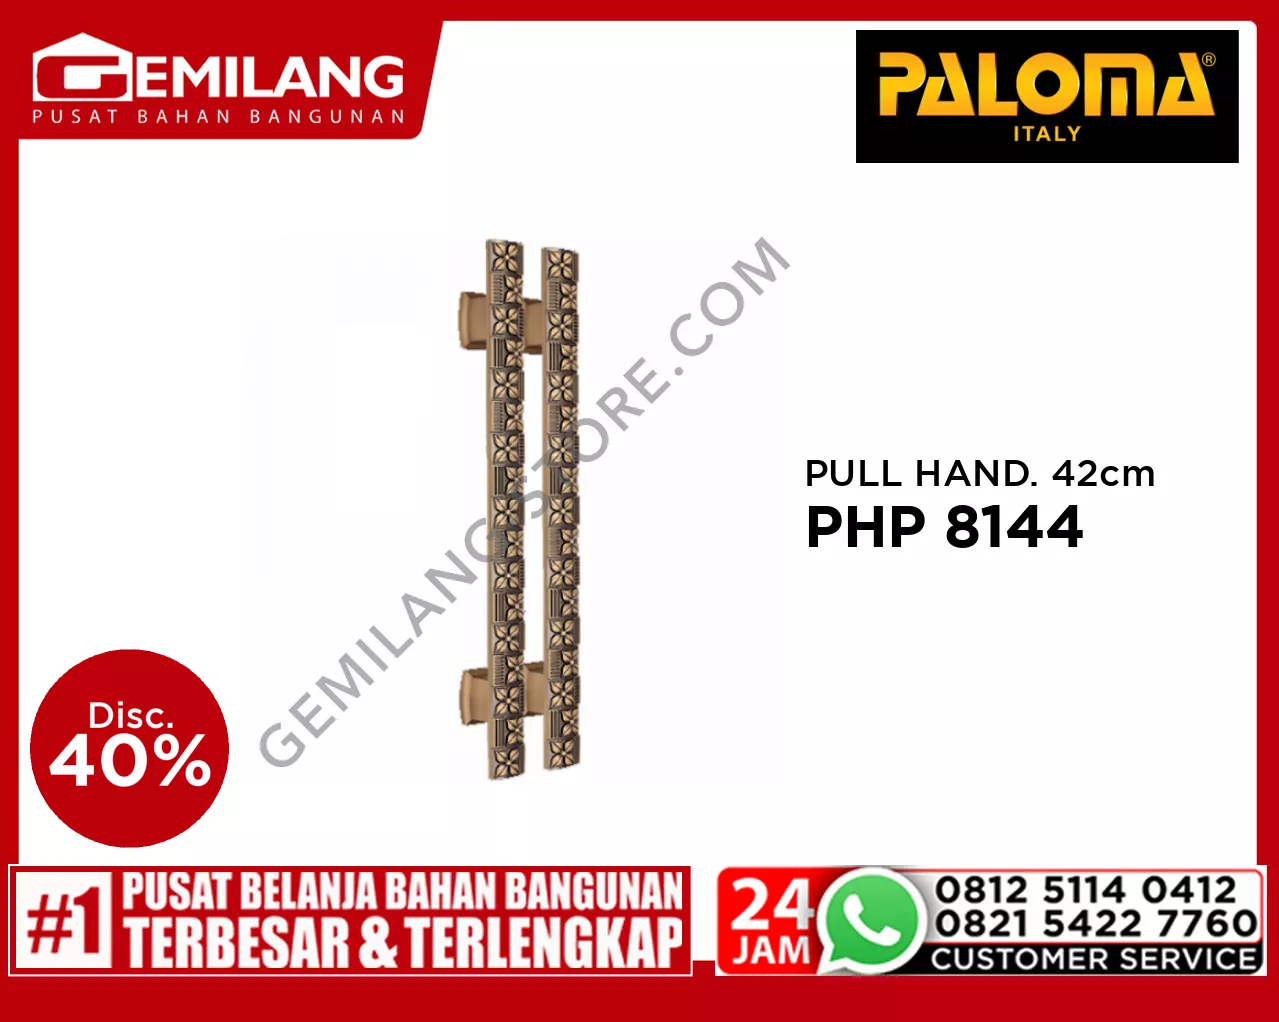 PALOMA PULL HANDLE CATANIA 420mm MAB PHP 8144